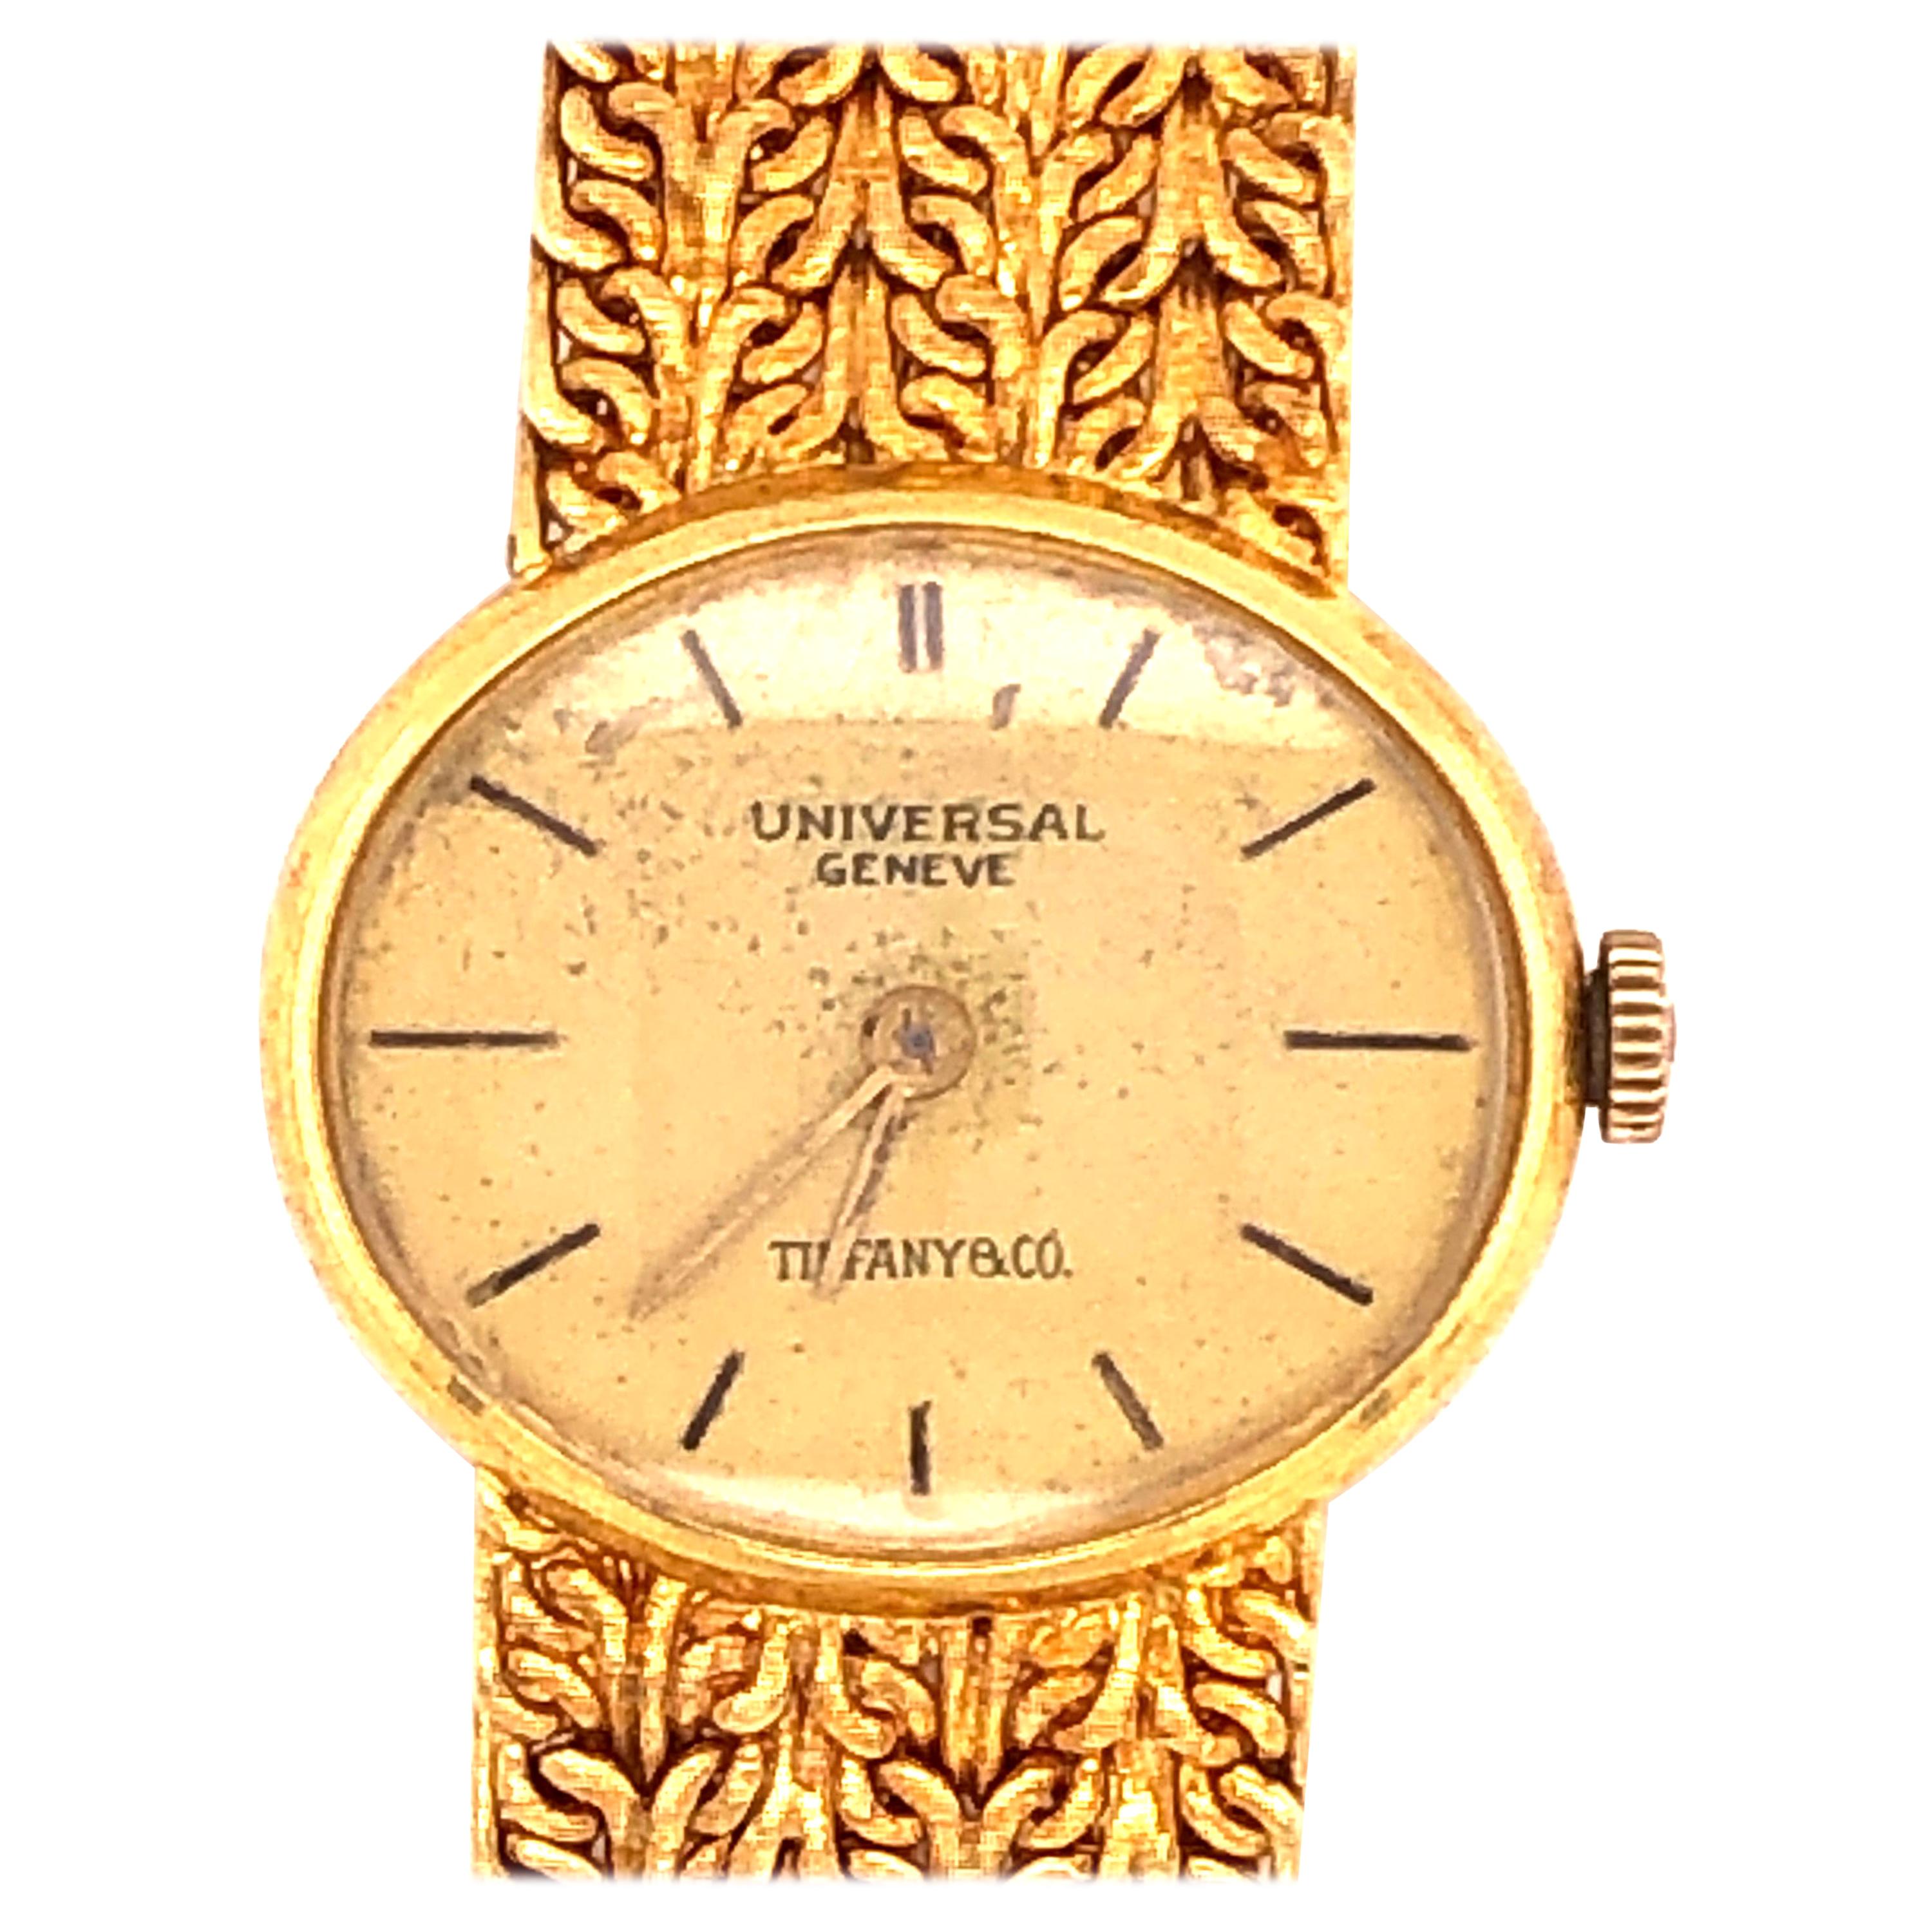 Tiffany & Co. Attrib.Universal Genève Ladies 18 Karat Yellow Gold Watch and Band